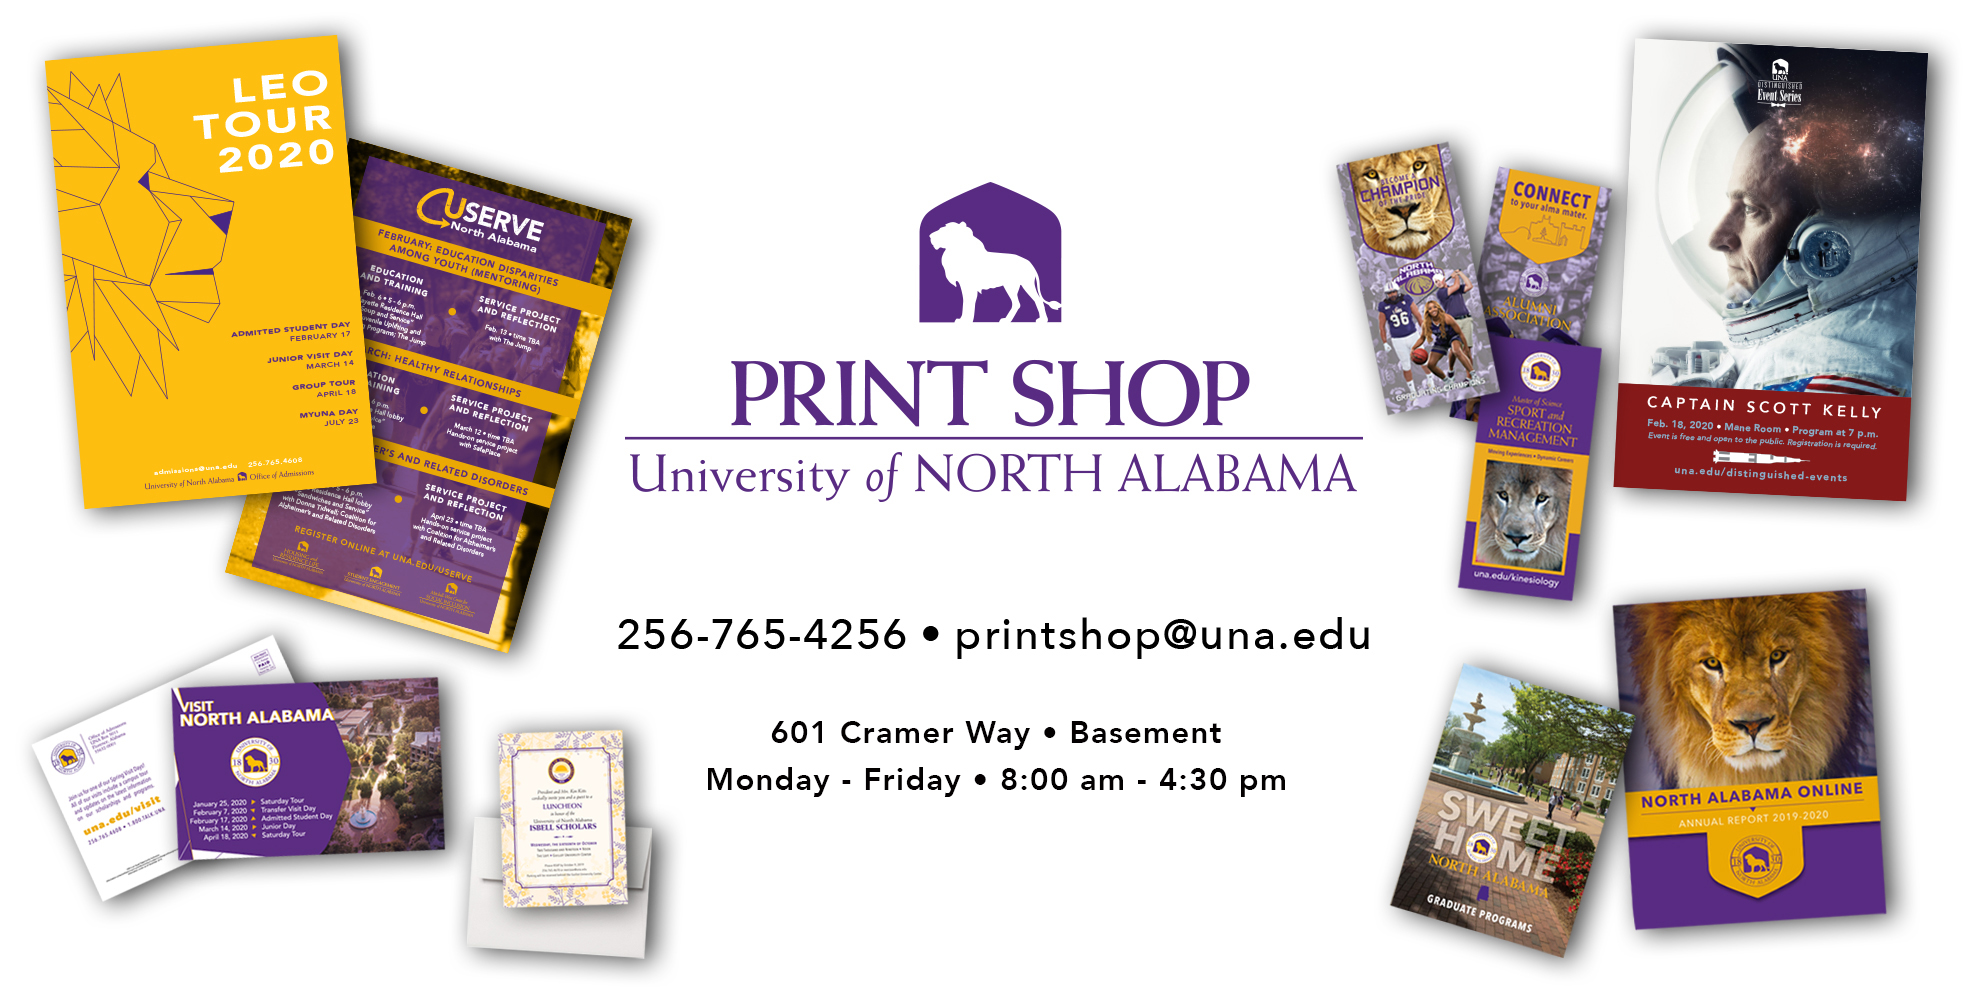 Print Shop, University of North Alabama